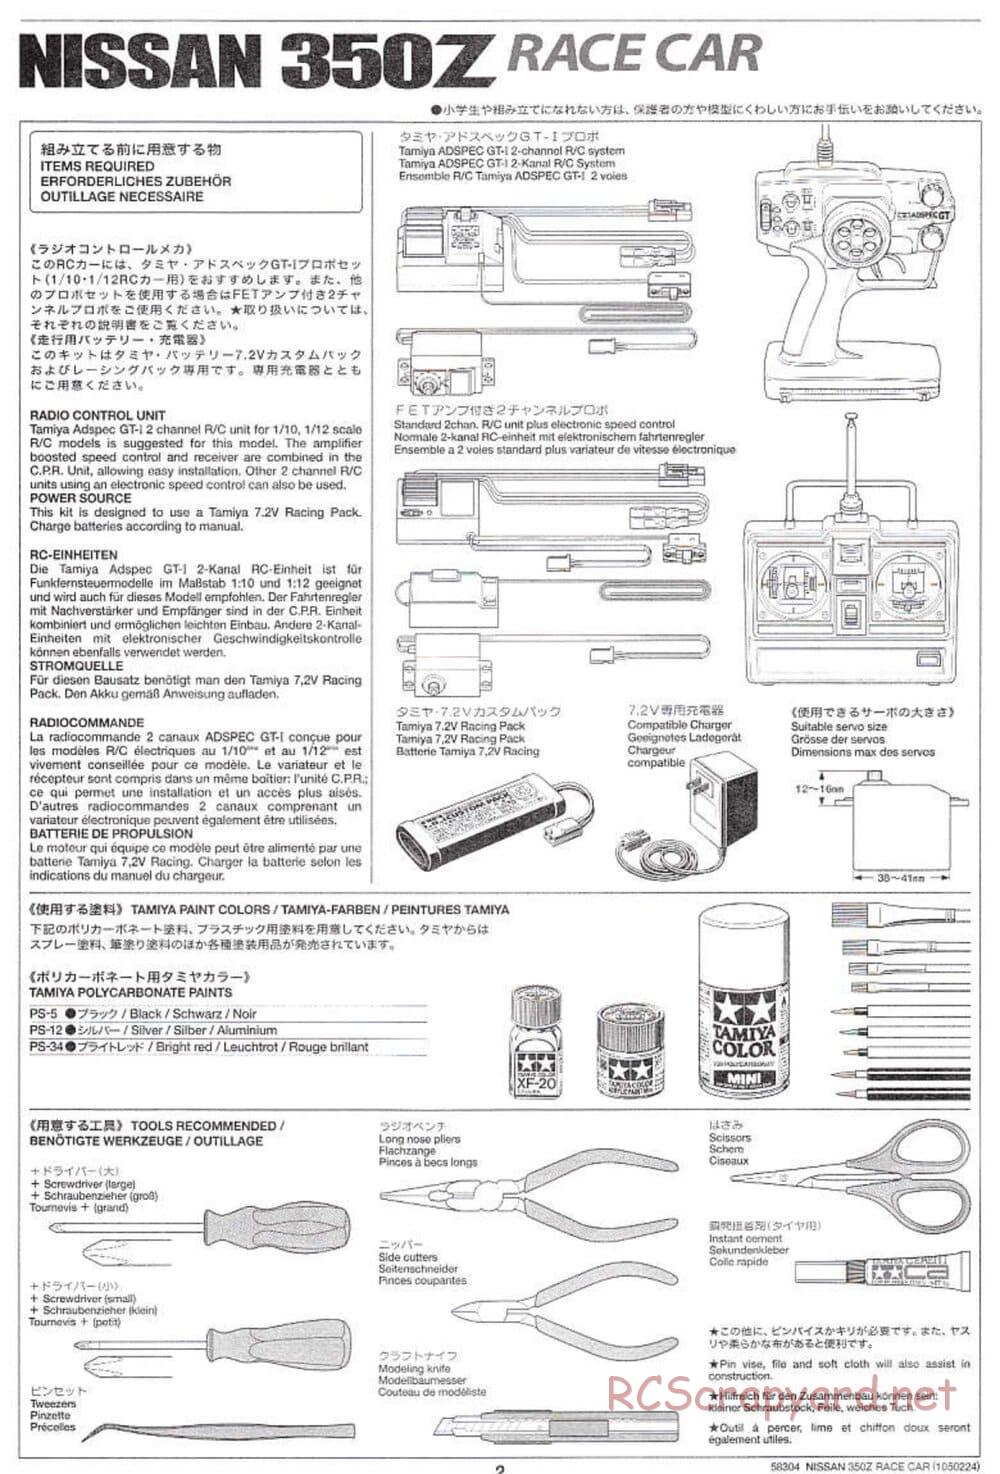 Tamiya - Nissan 350Z Race-Car - TT-01 Chassis - Manual - Page 2